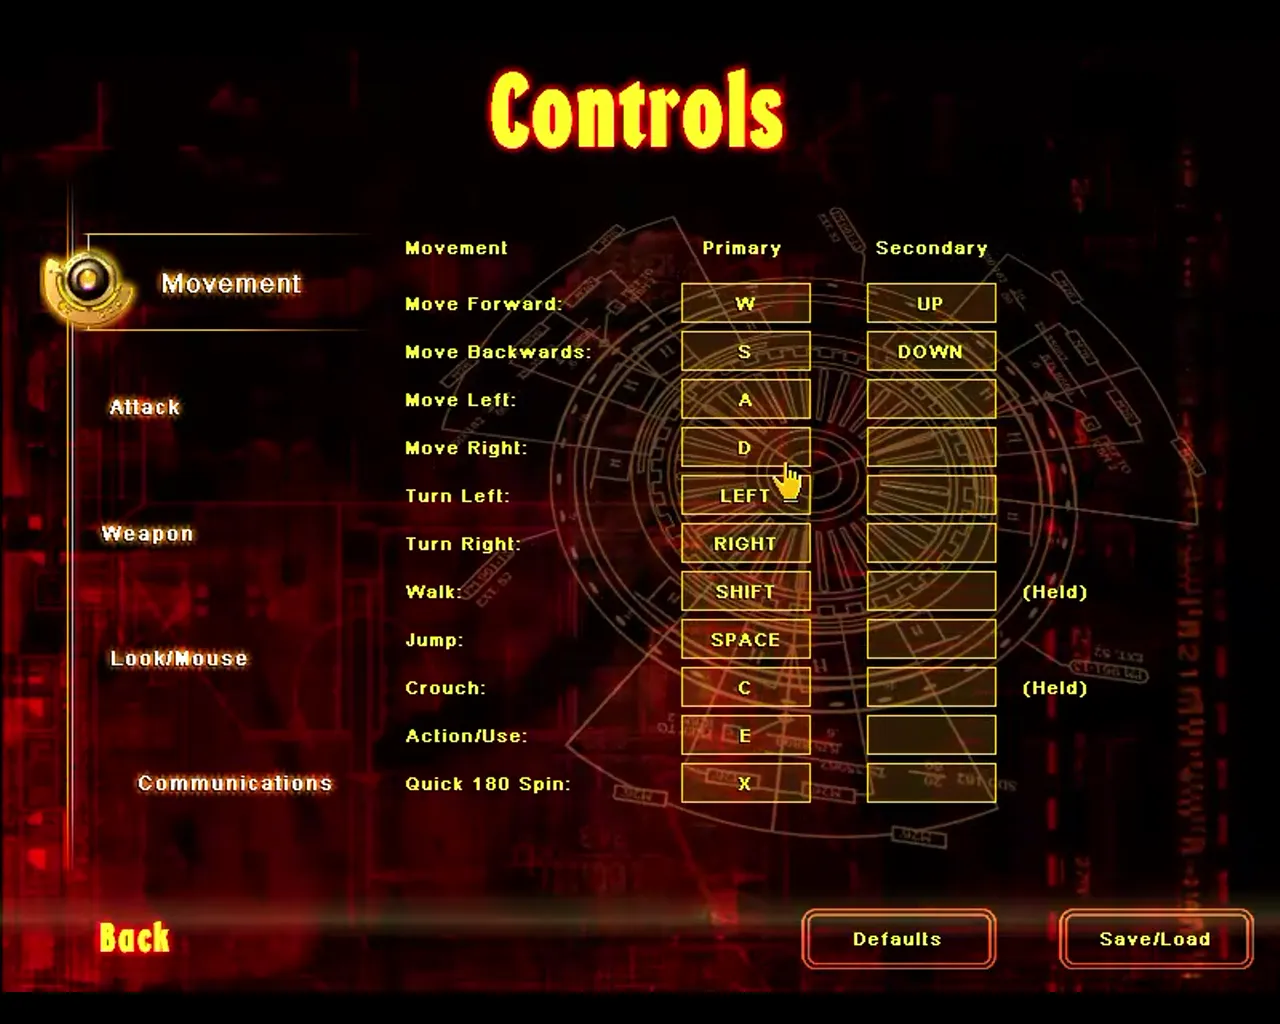 Command & Conquer: Renegade for Windows 10